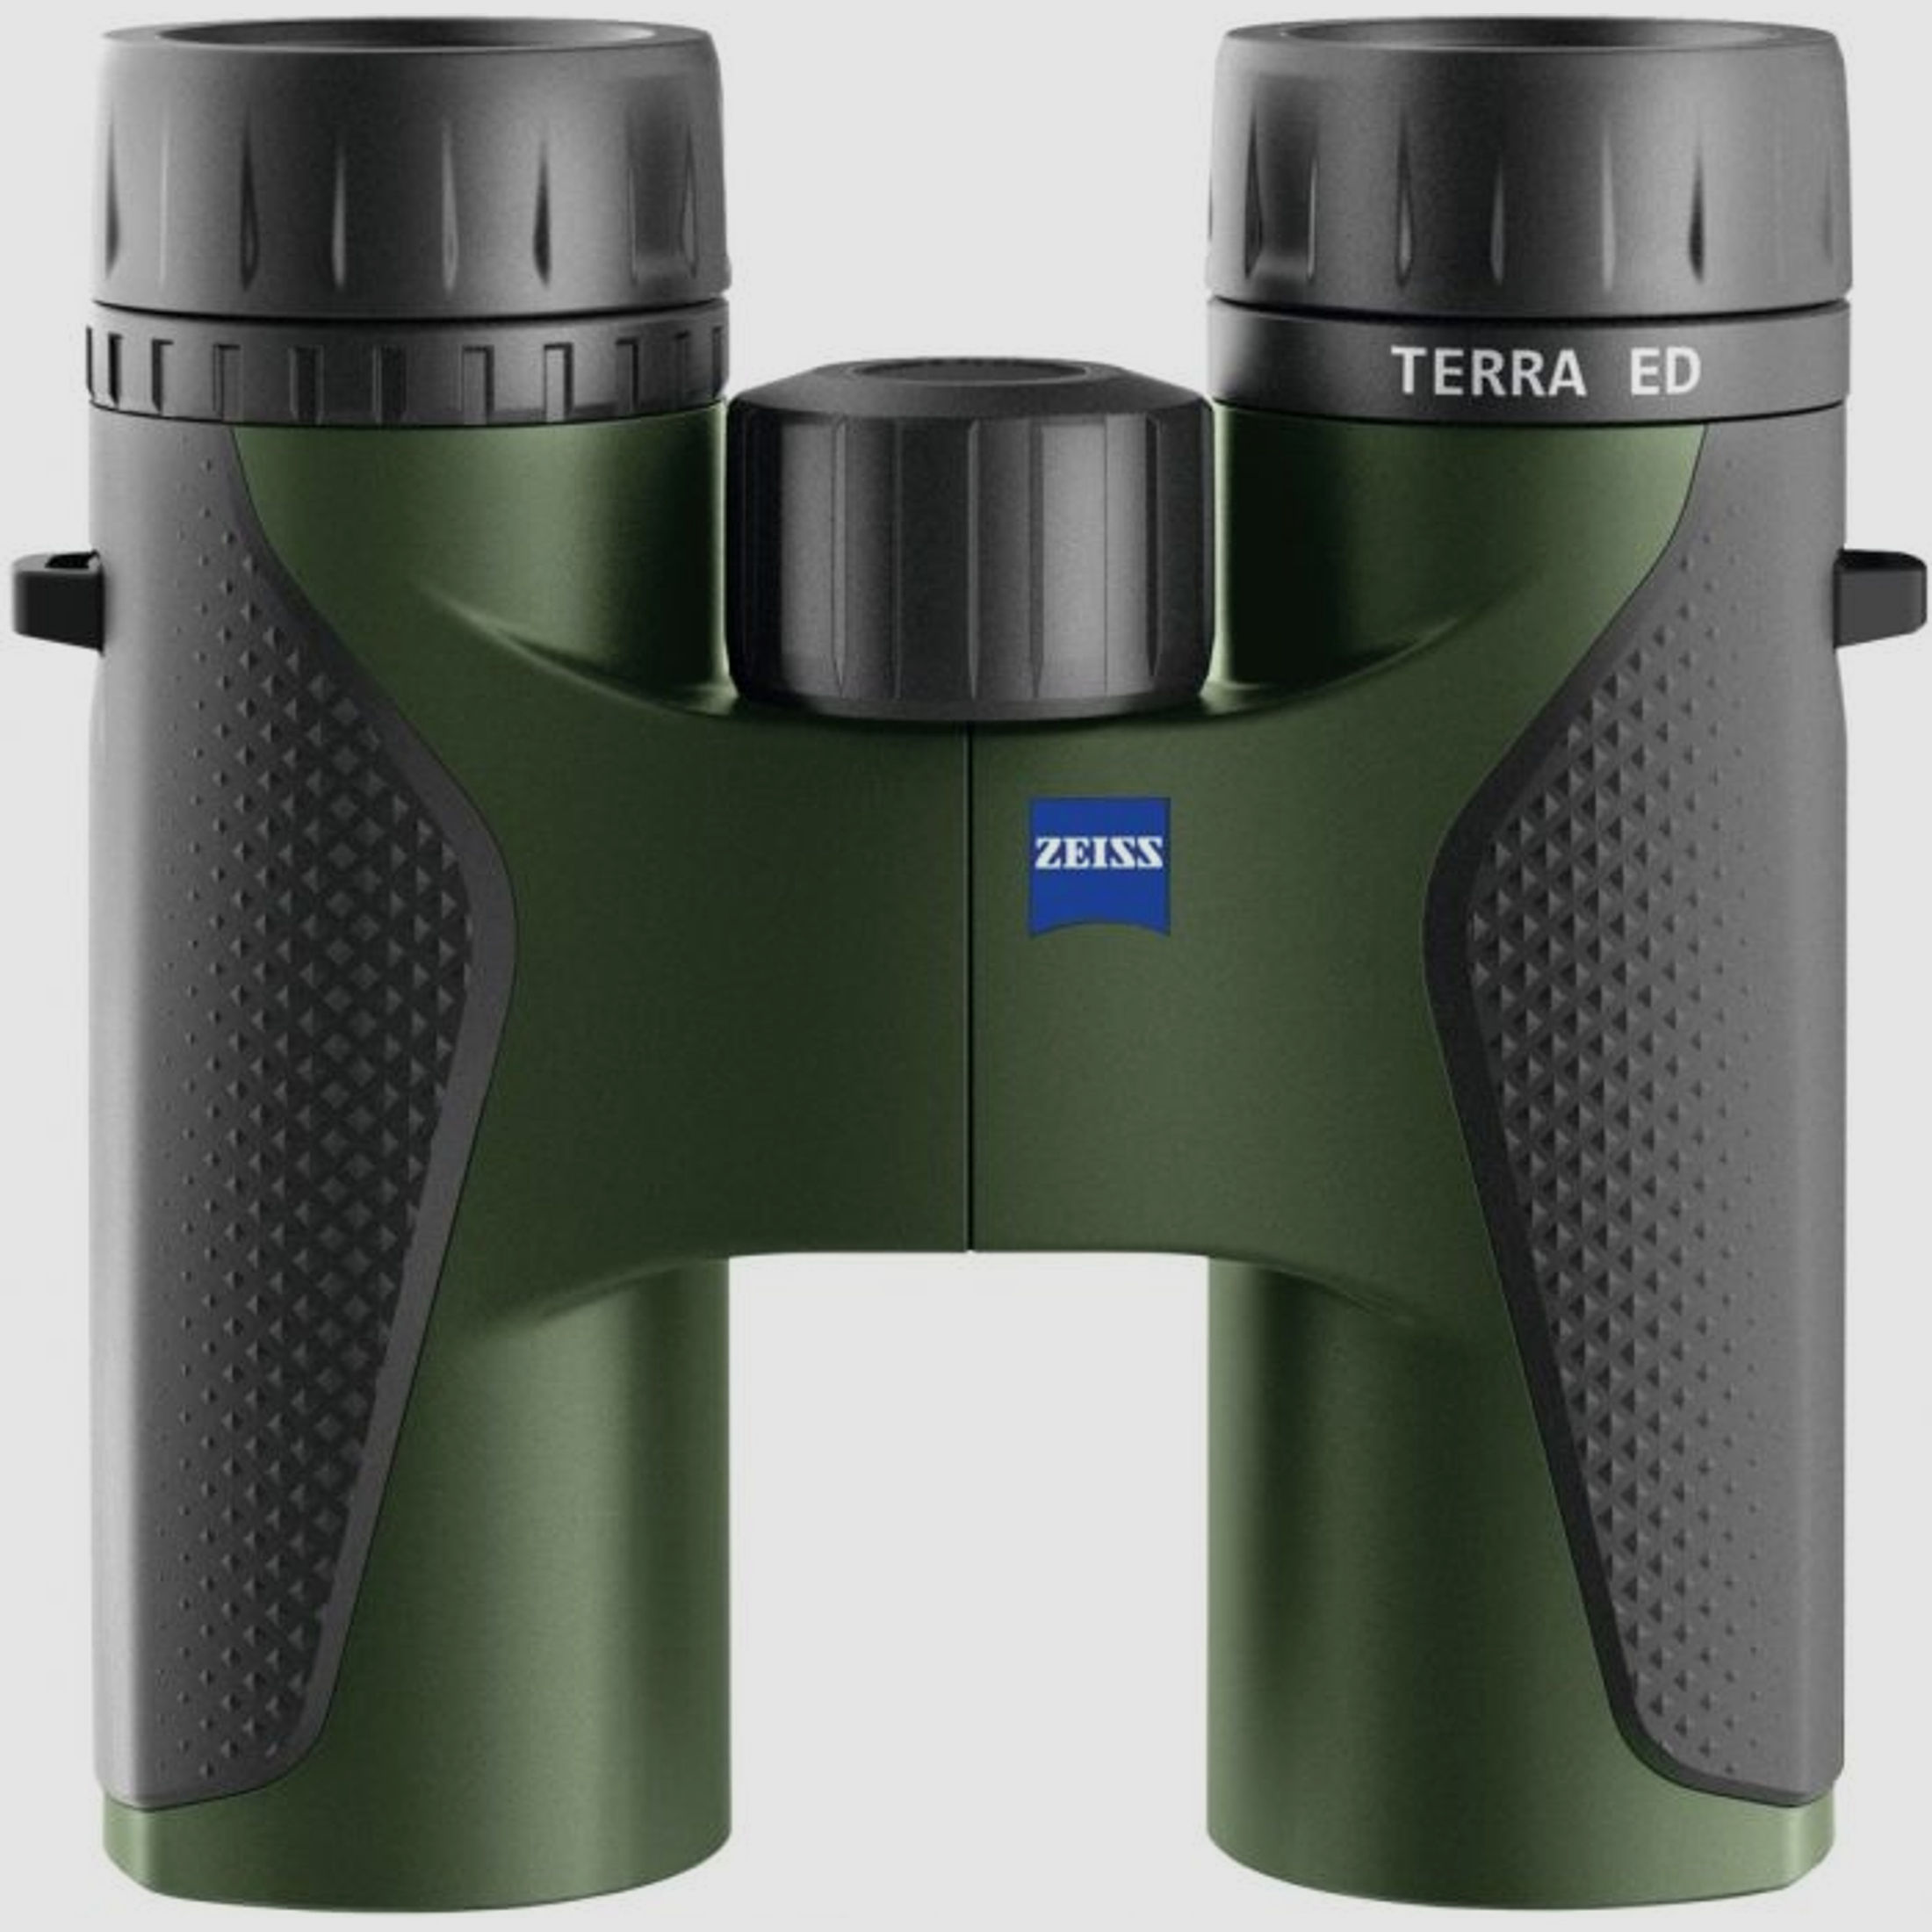 Zeiss ZEISS Terra ED 10x32 schwarz/grün